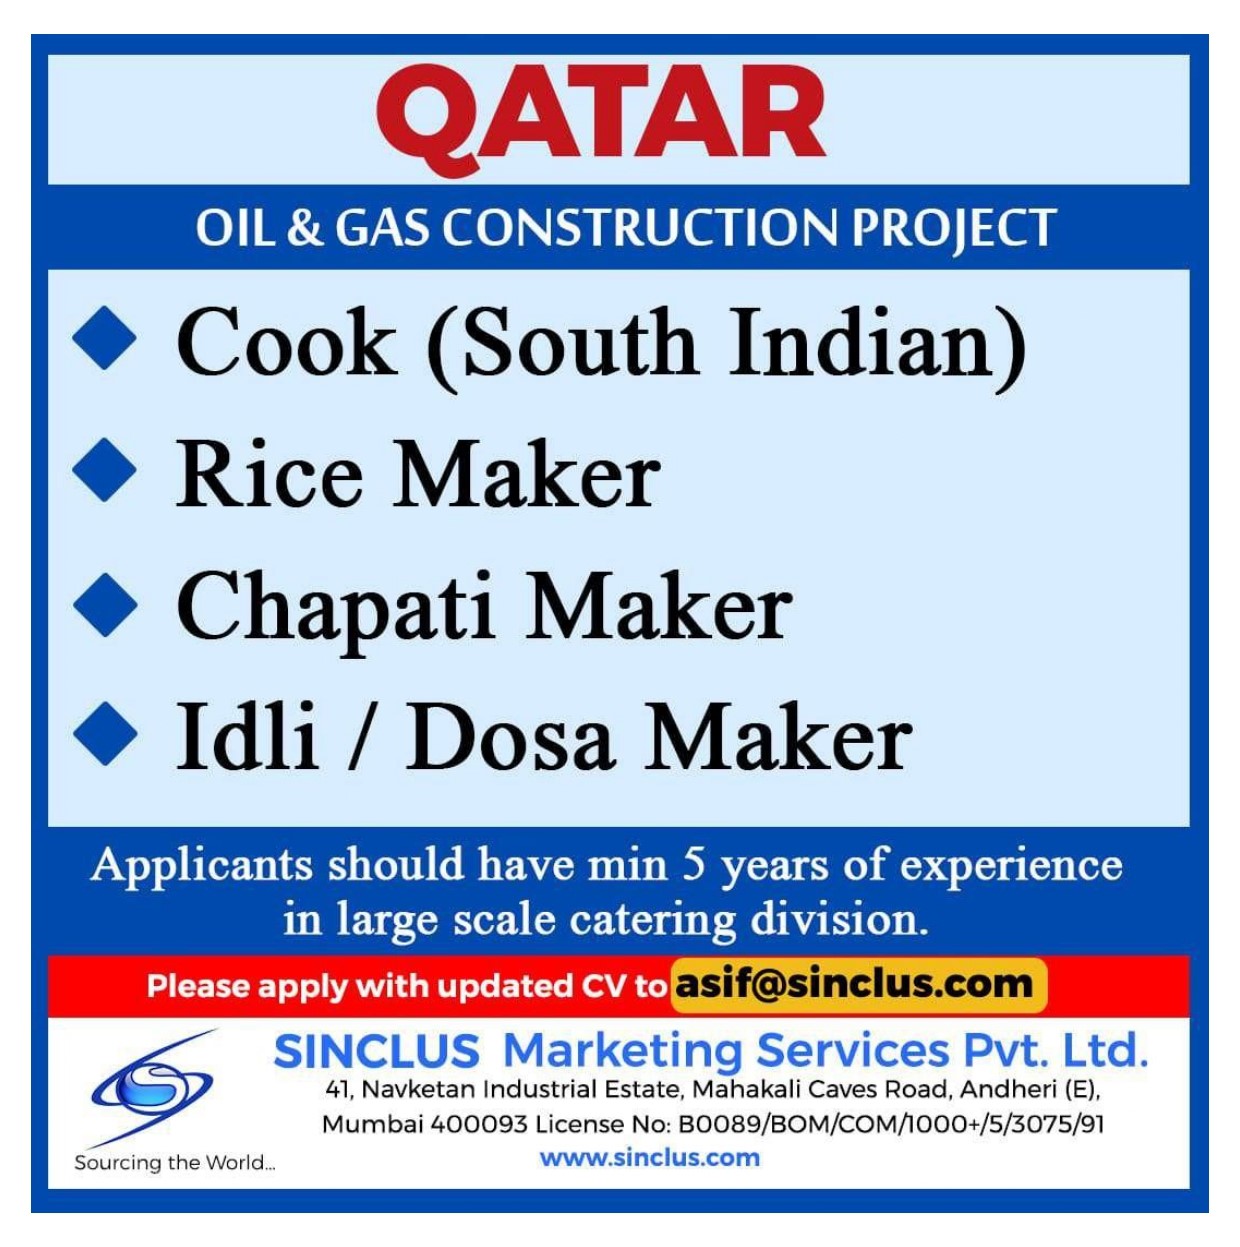 Oil & Gas Construction Jobs